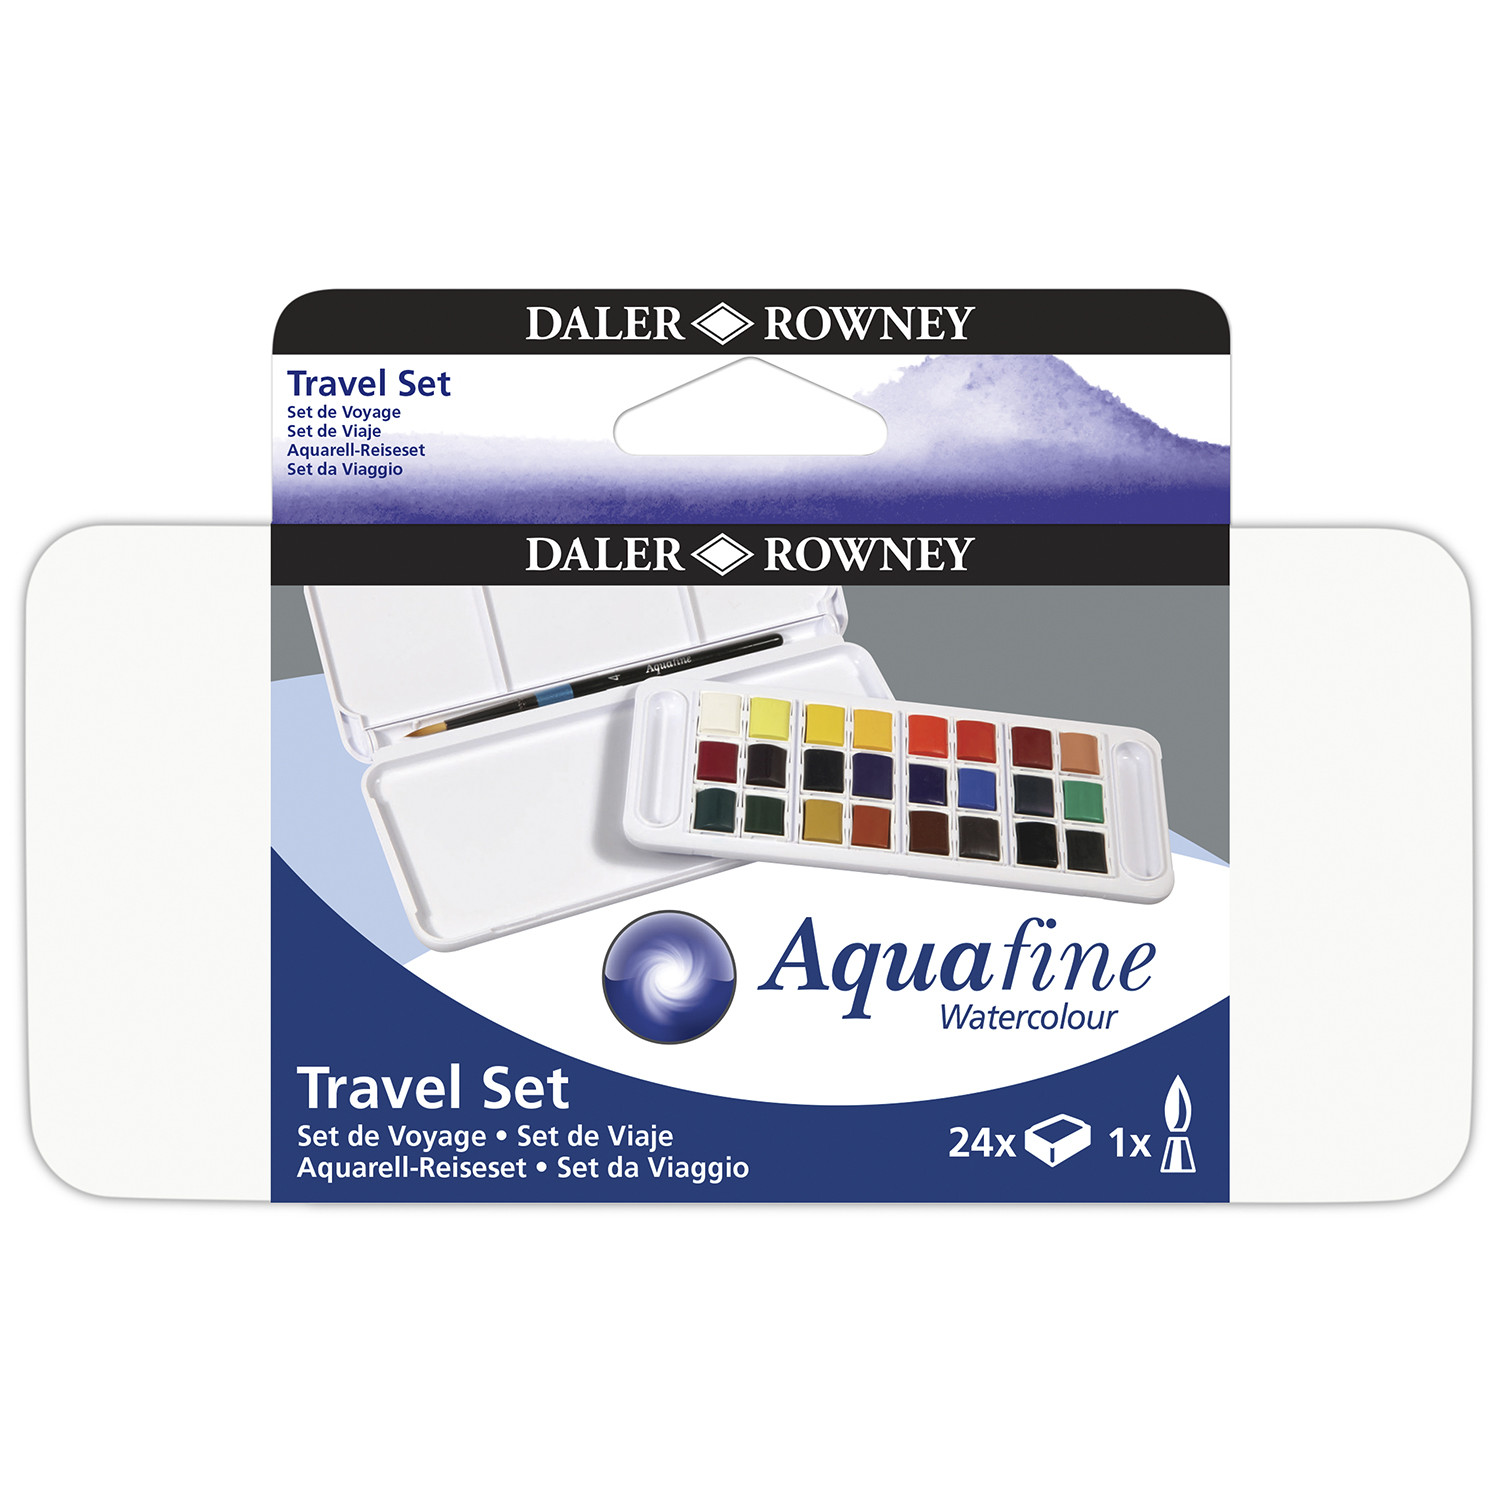 Aquafine Watercolour Travel Set Image 1